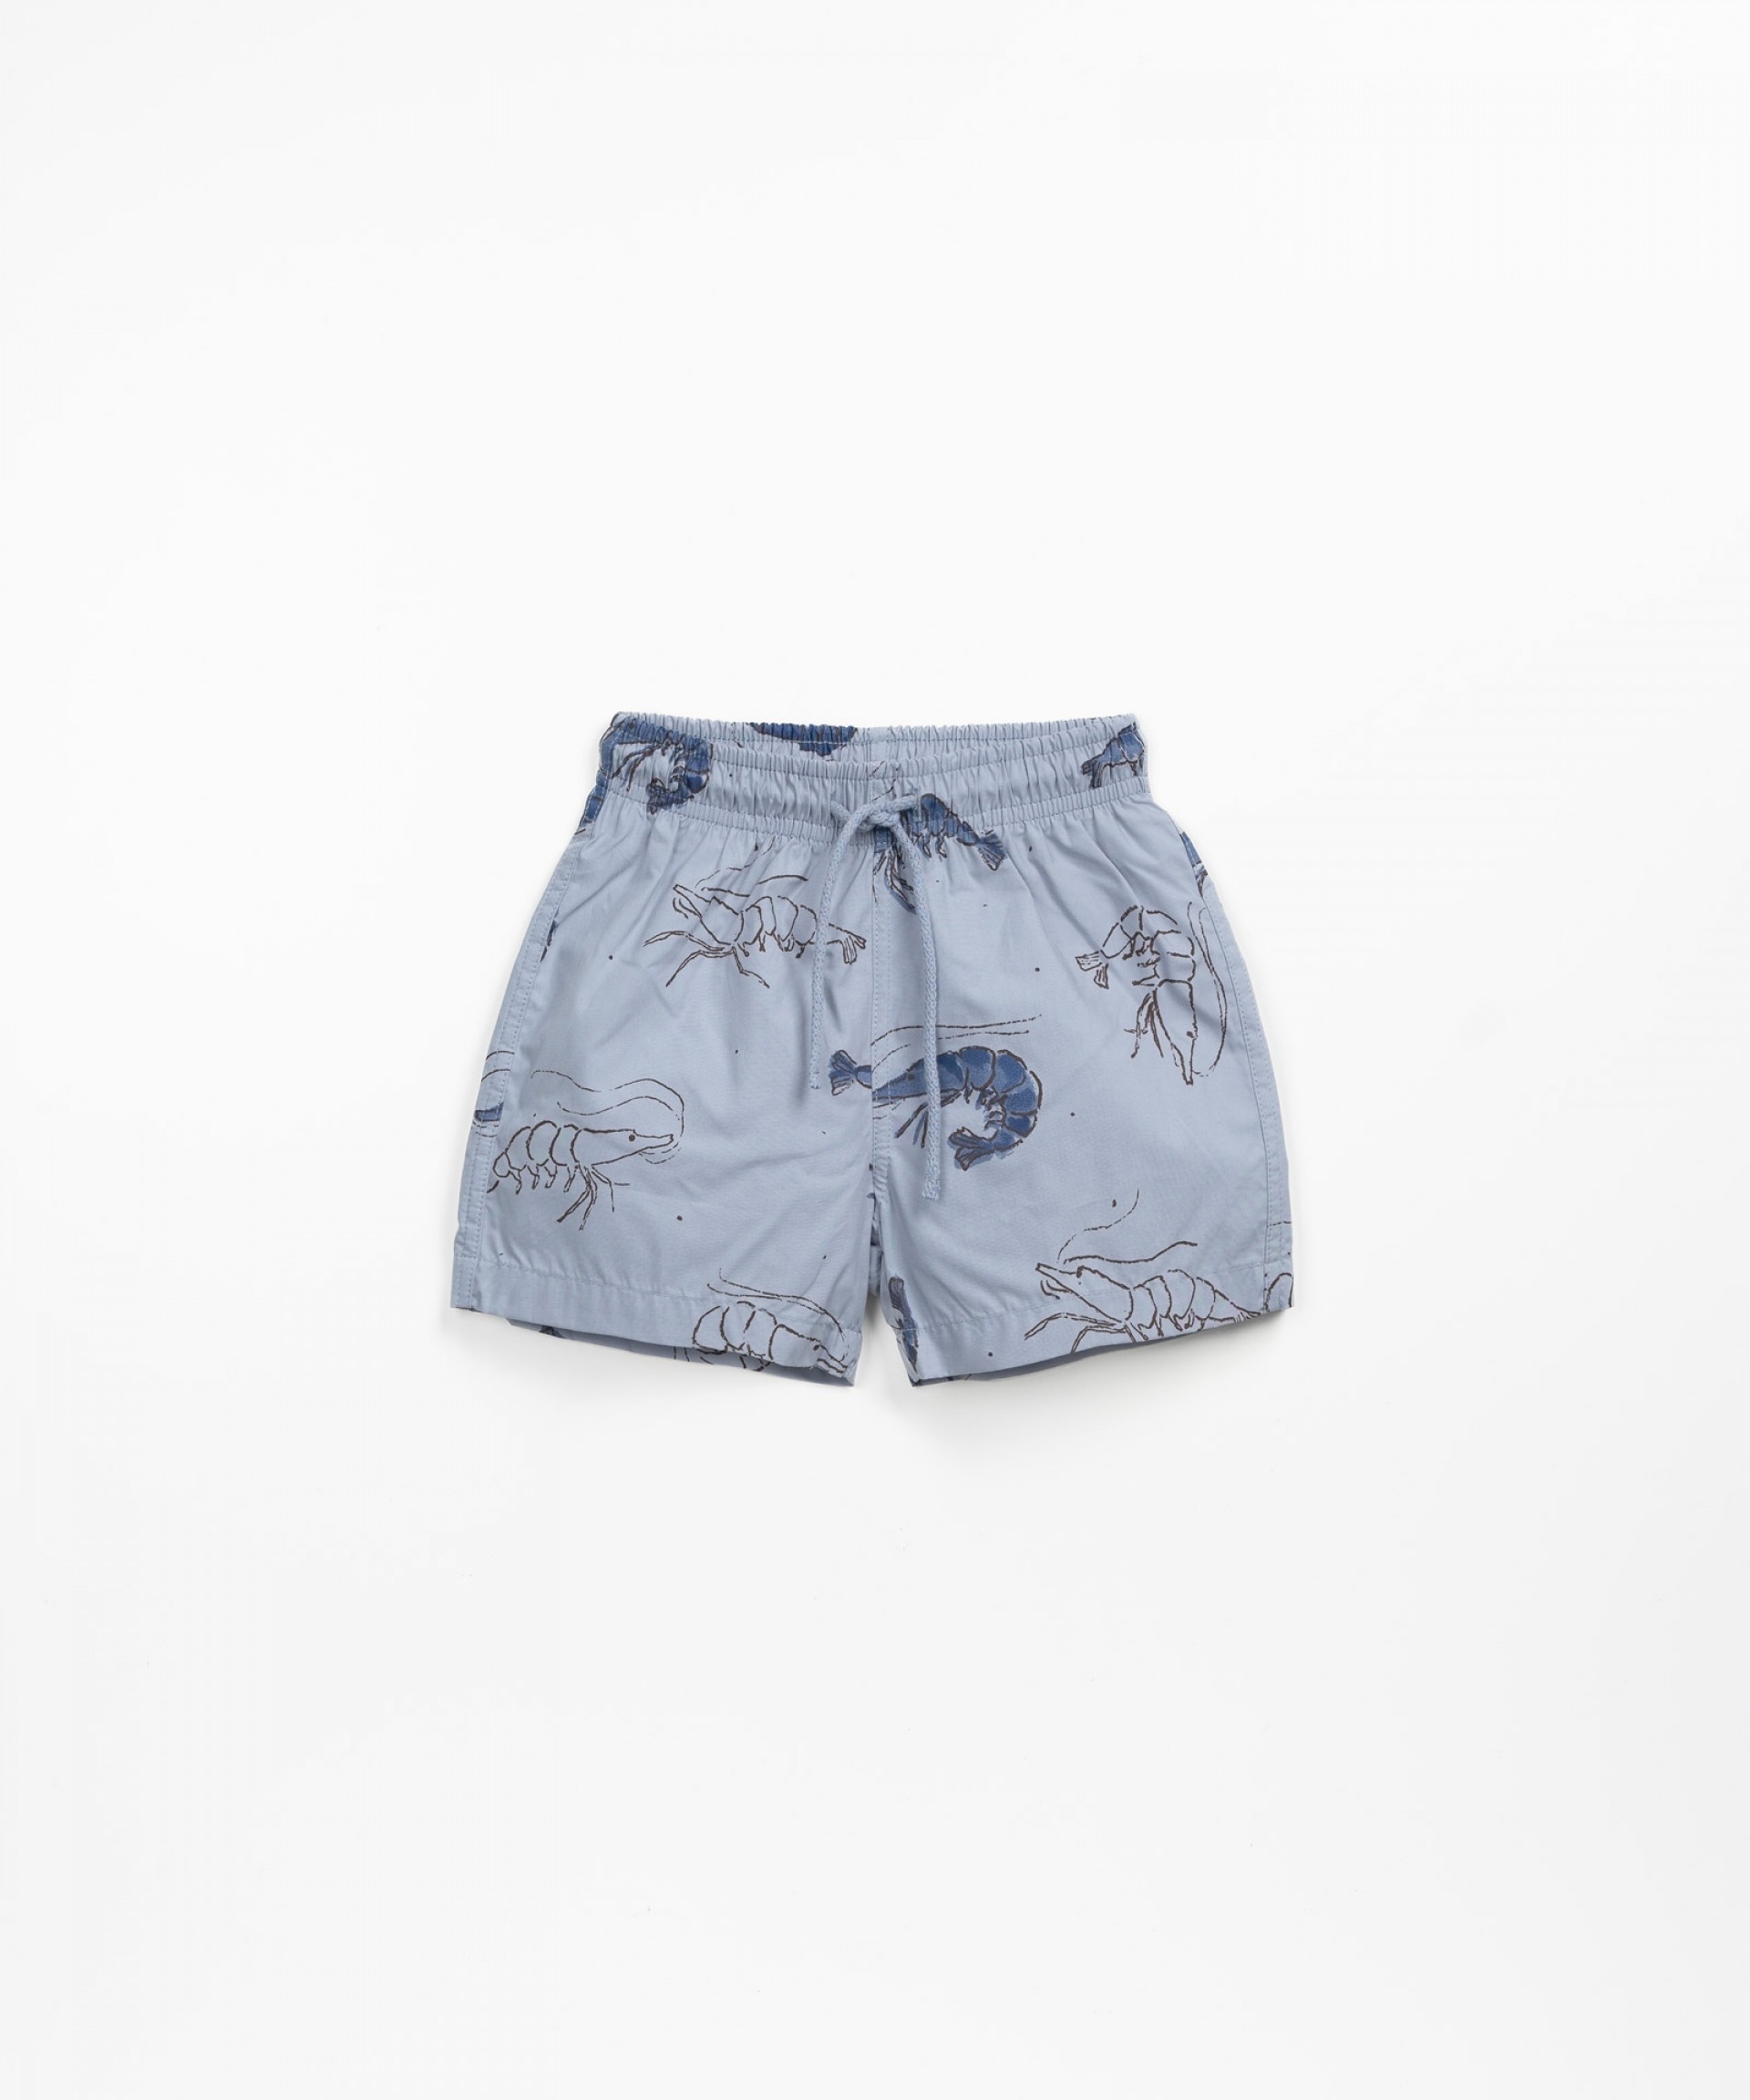 Swimming shorts with prawns print | Textile Art